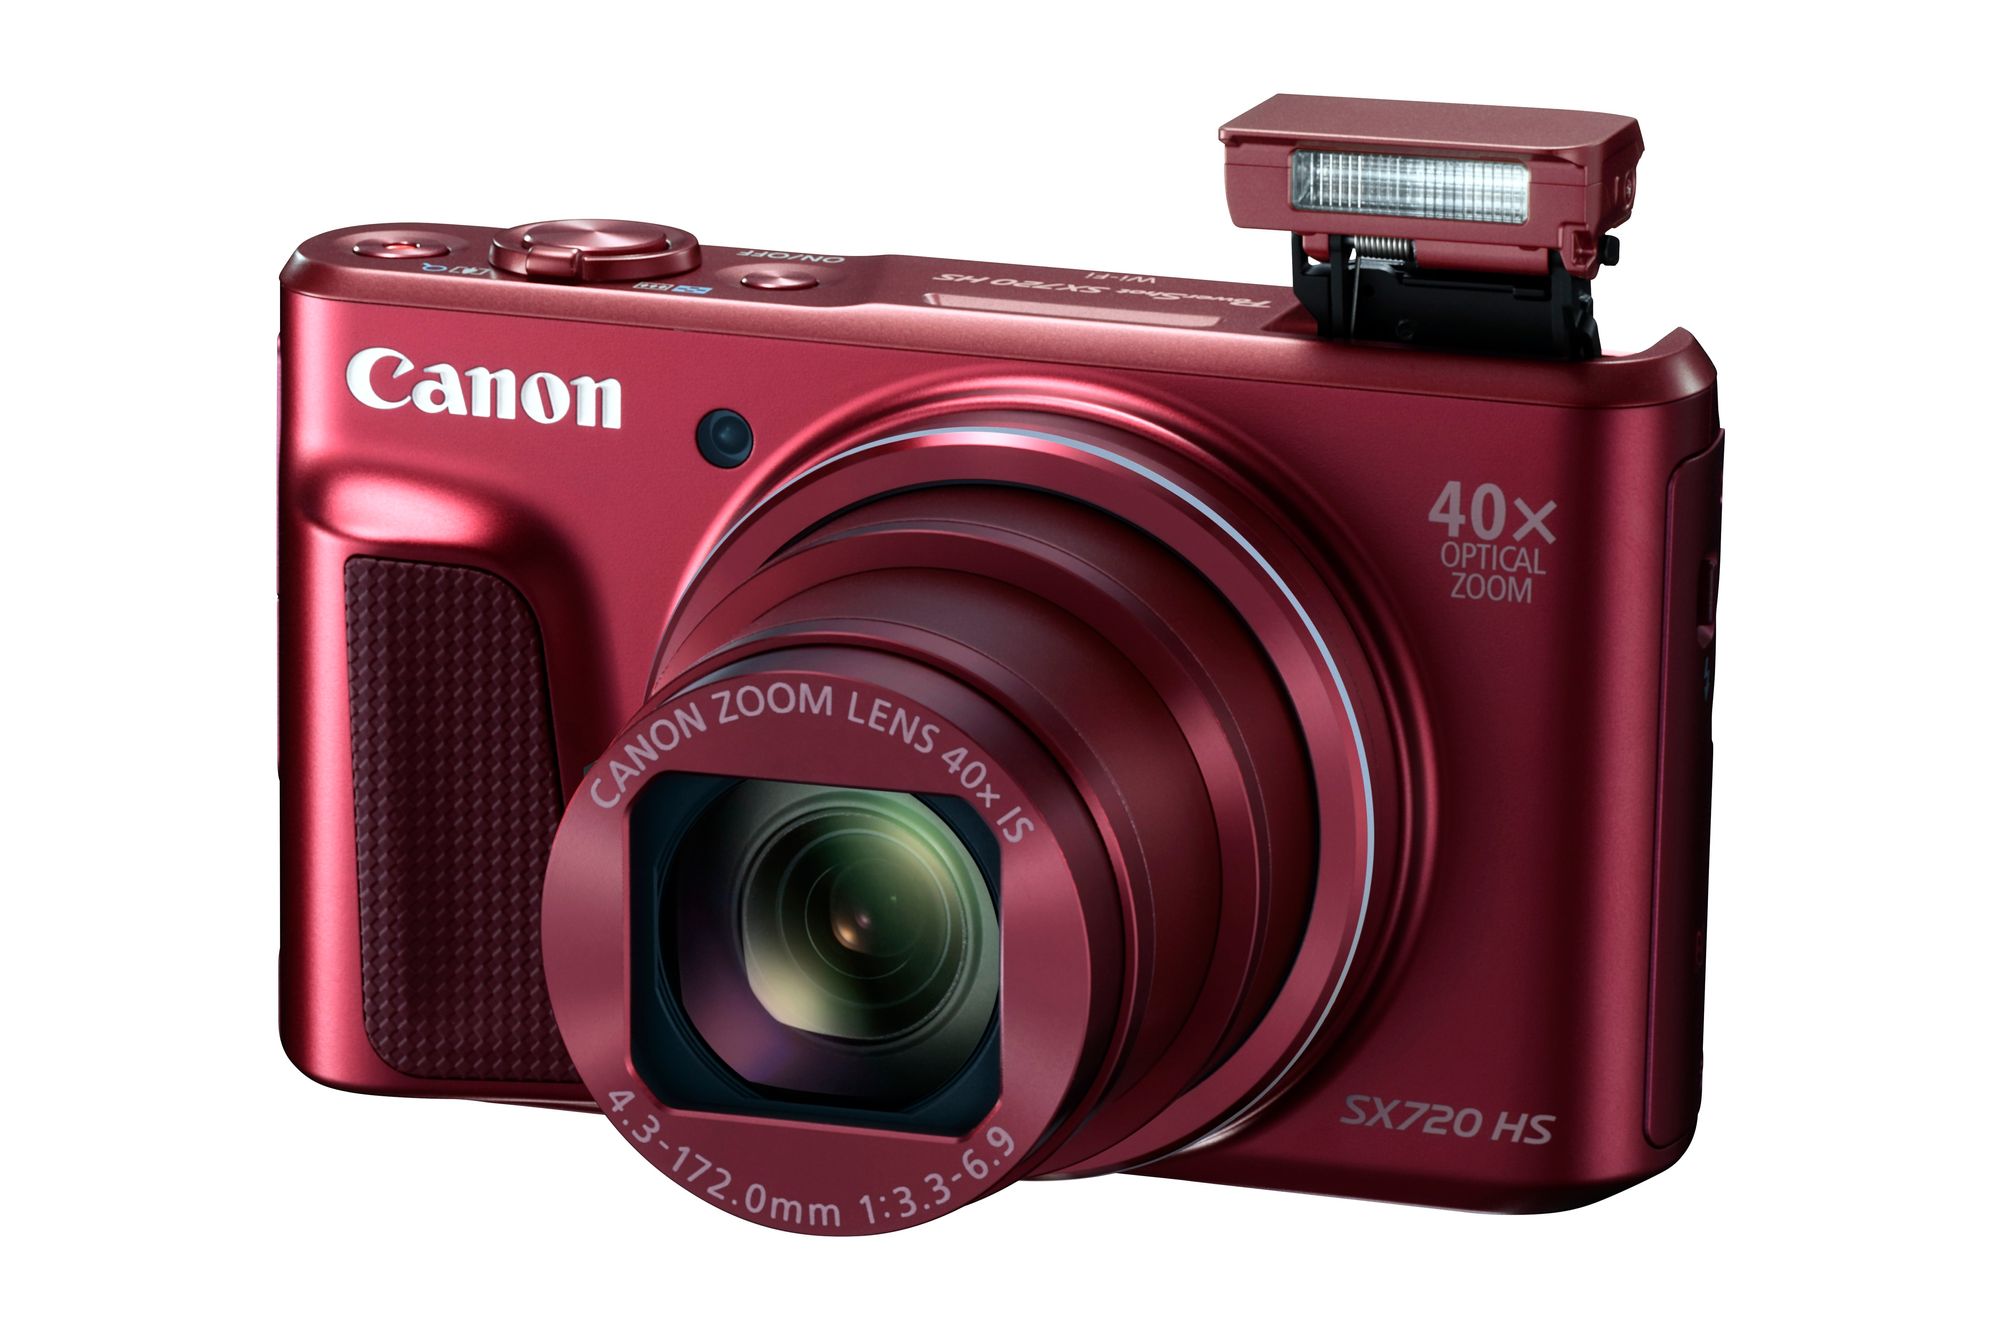 Canon PowerShot SX720 HS - Elektronikkbransjen.no